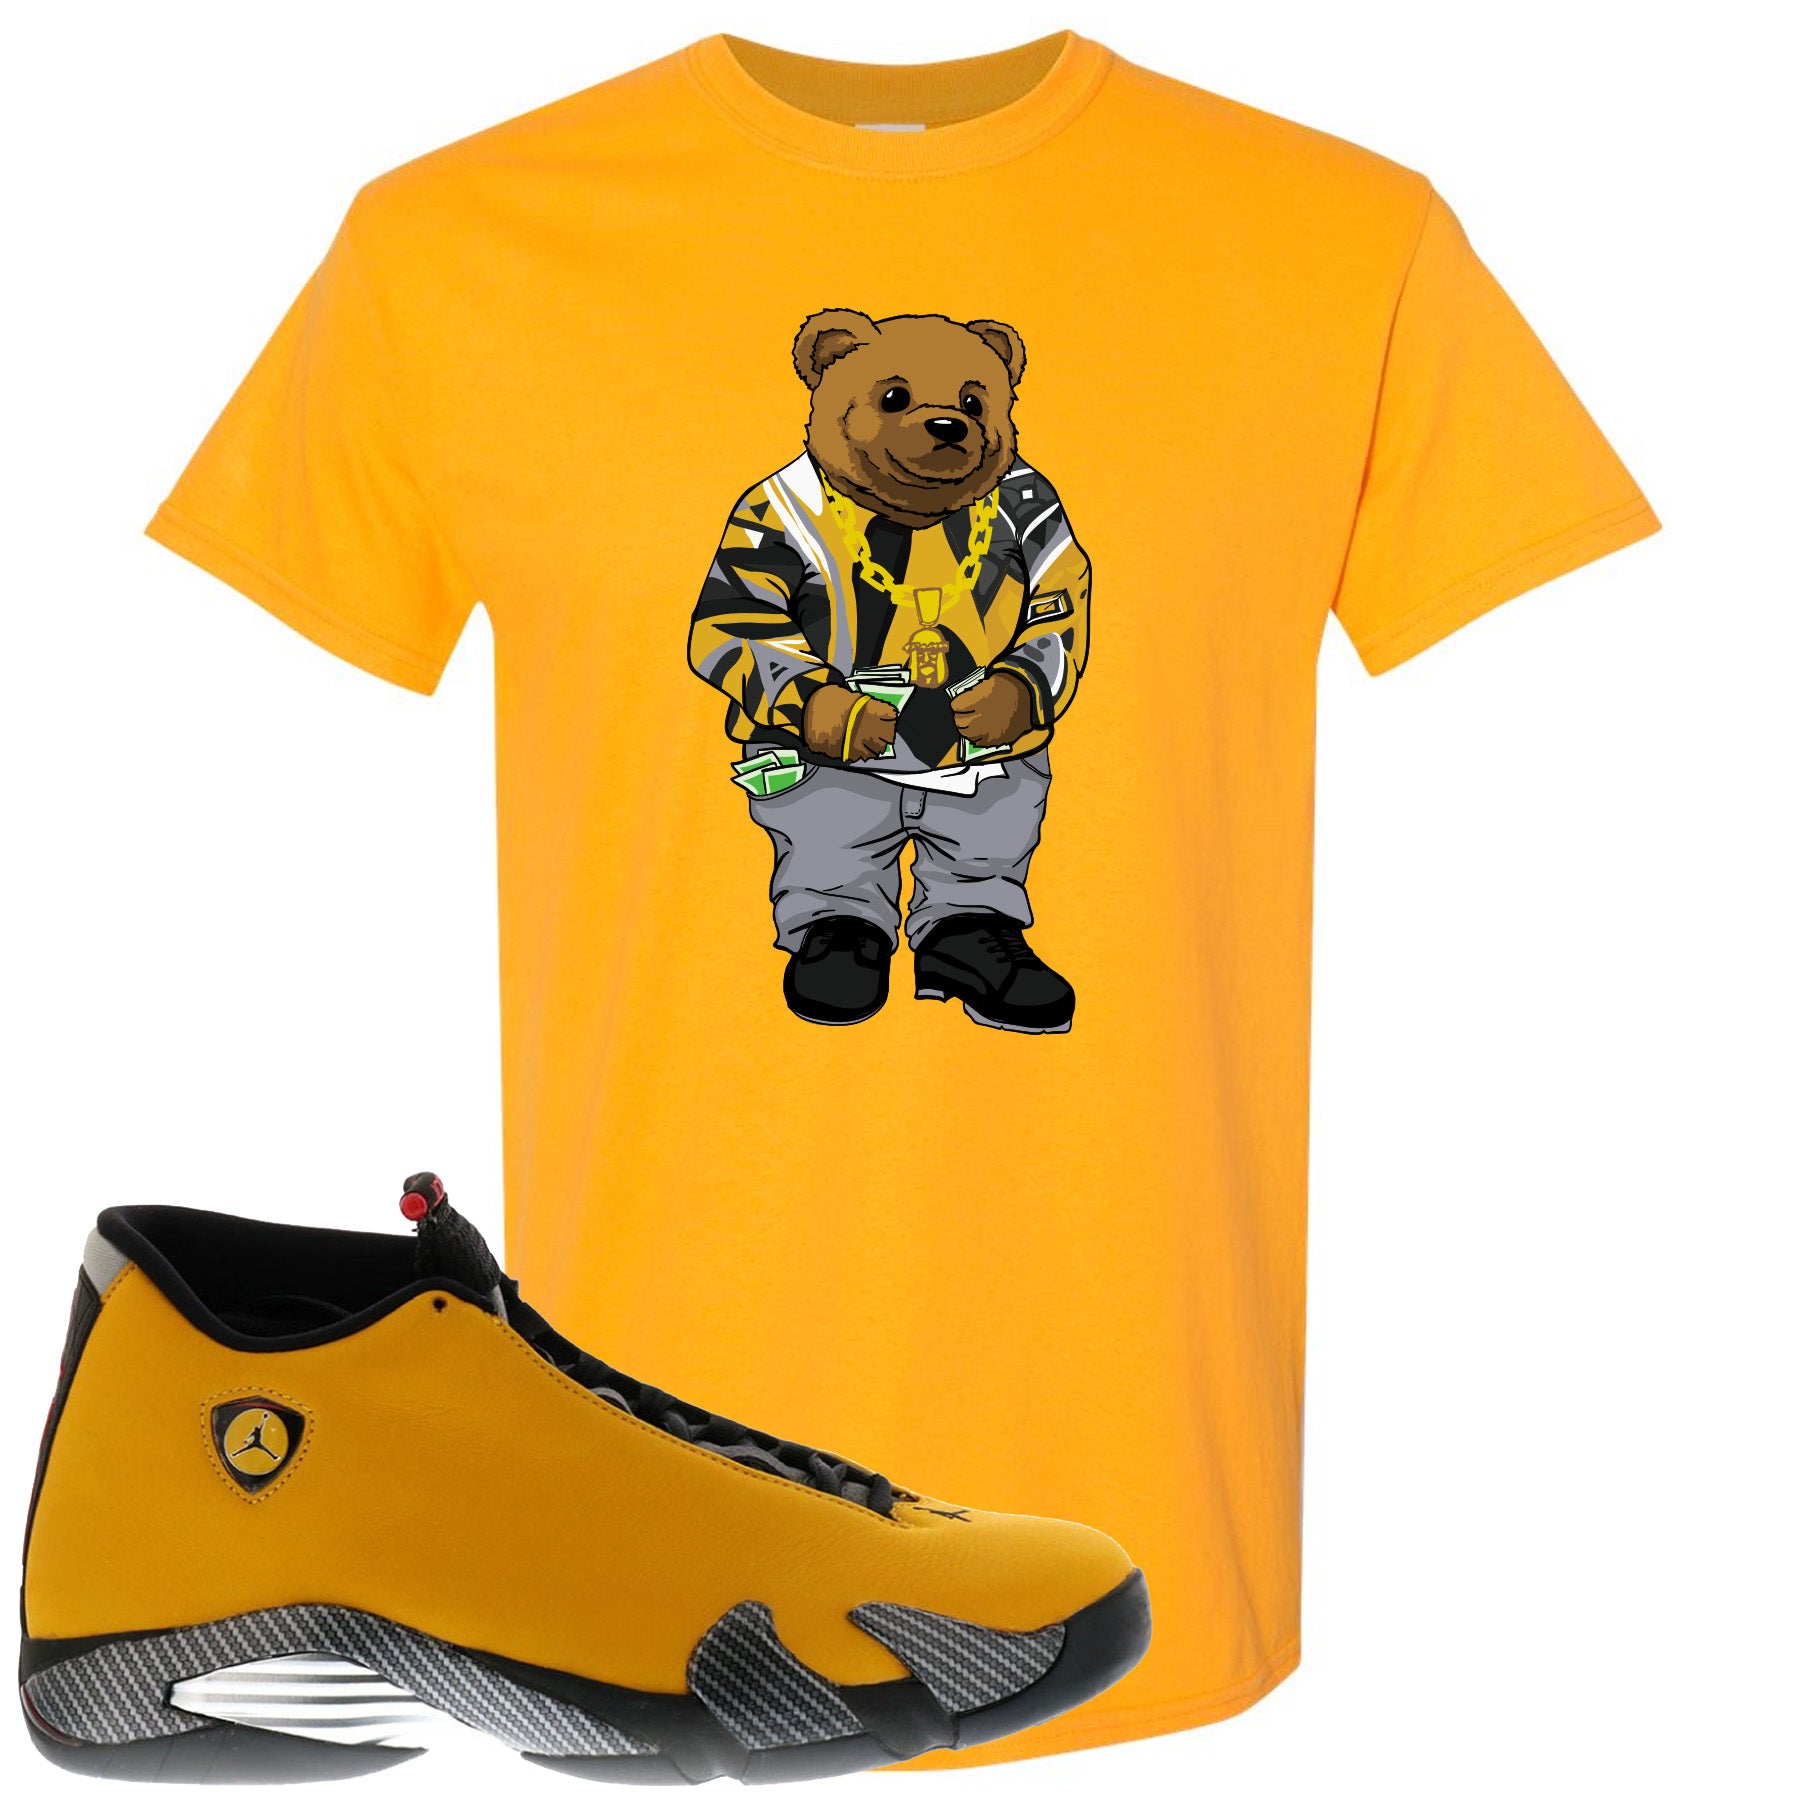 shirts to match jordan 14 yellow ferrari